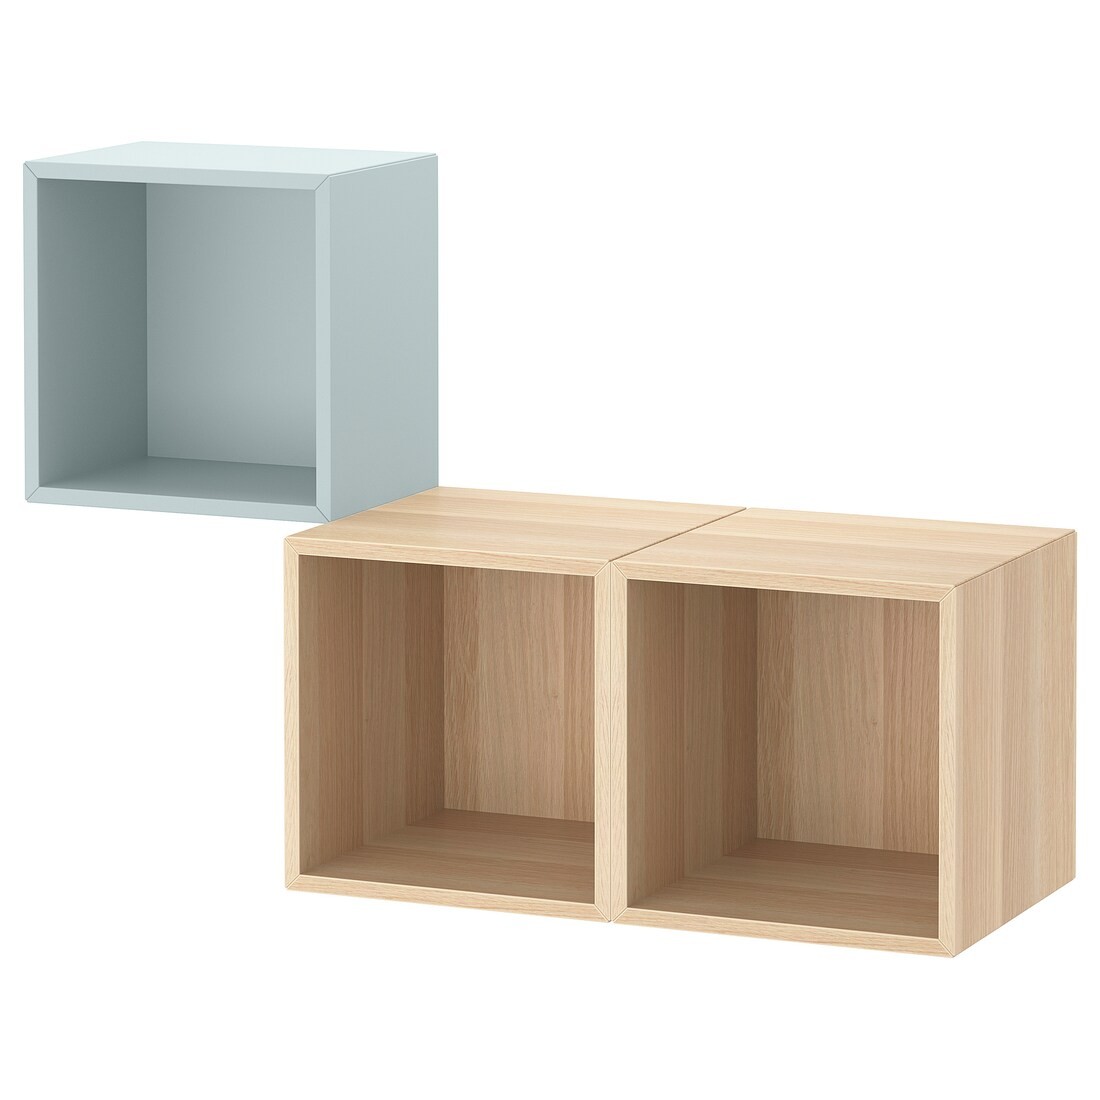 EKET Комбинация настенных шкафов, светлый серо-голубой/белый дуб, 105x35x70 см